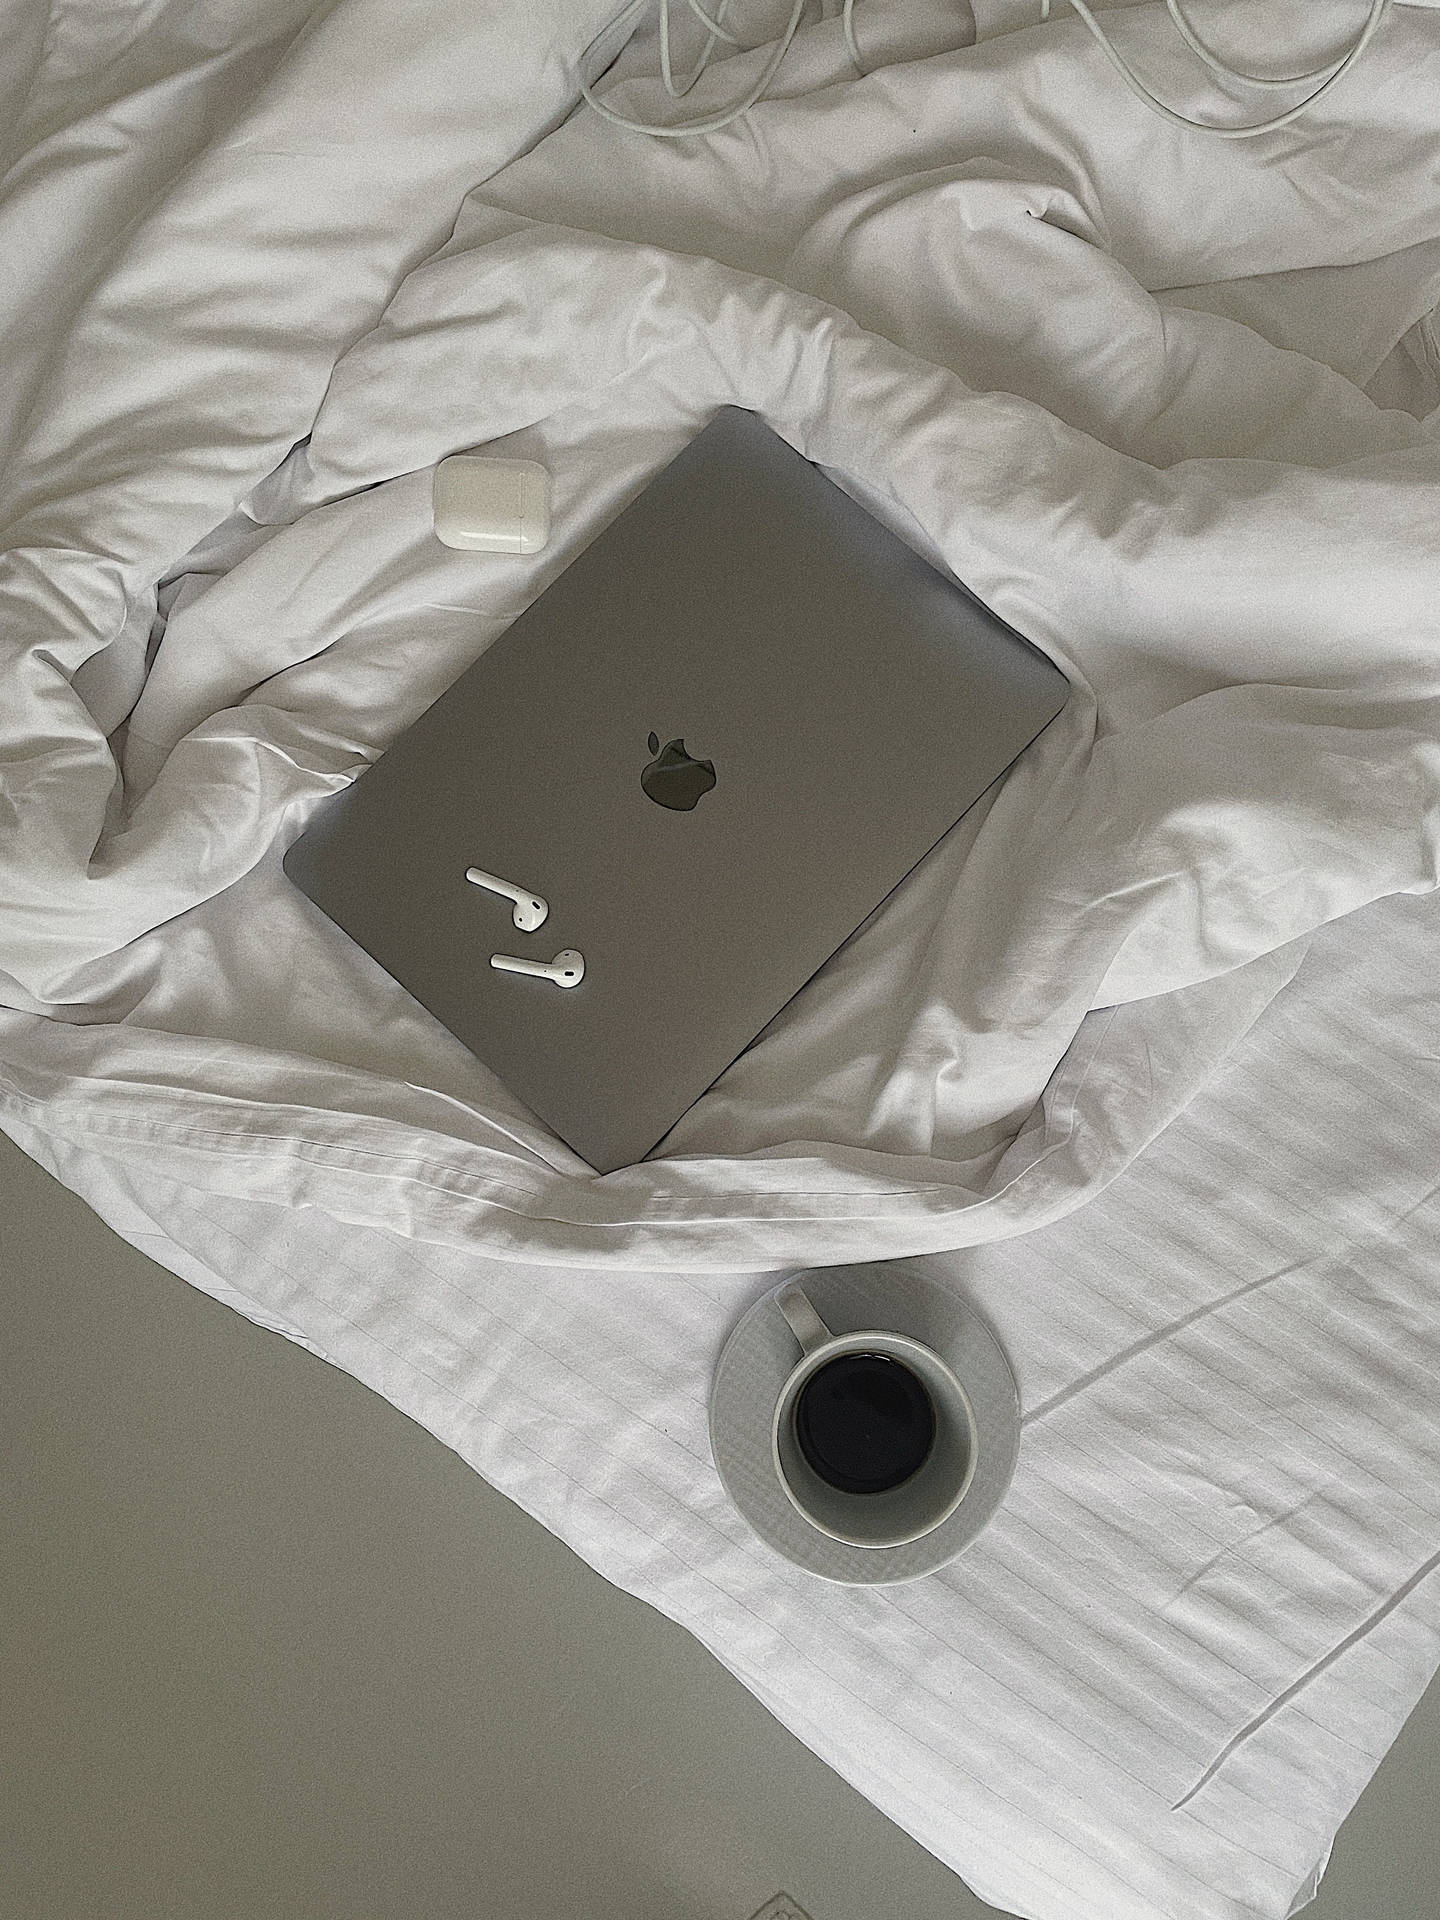 Aesthetic Tumblr Laptop Macbook Coffee Background